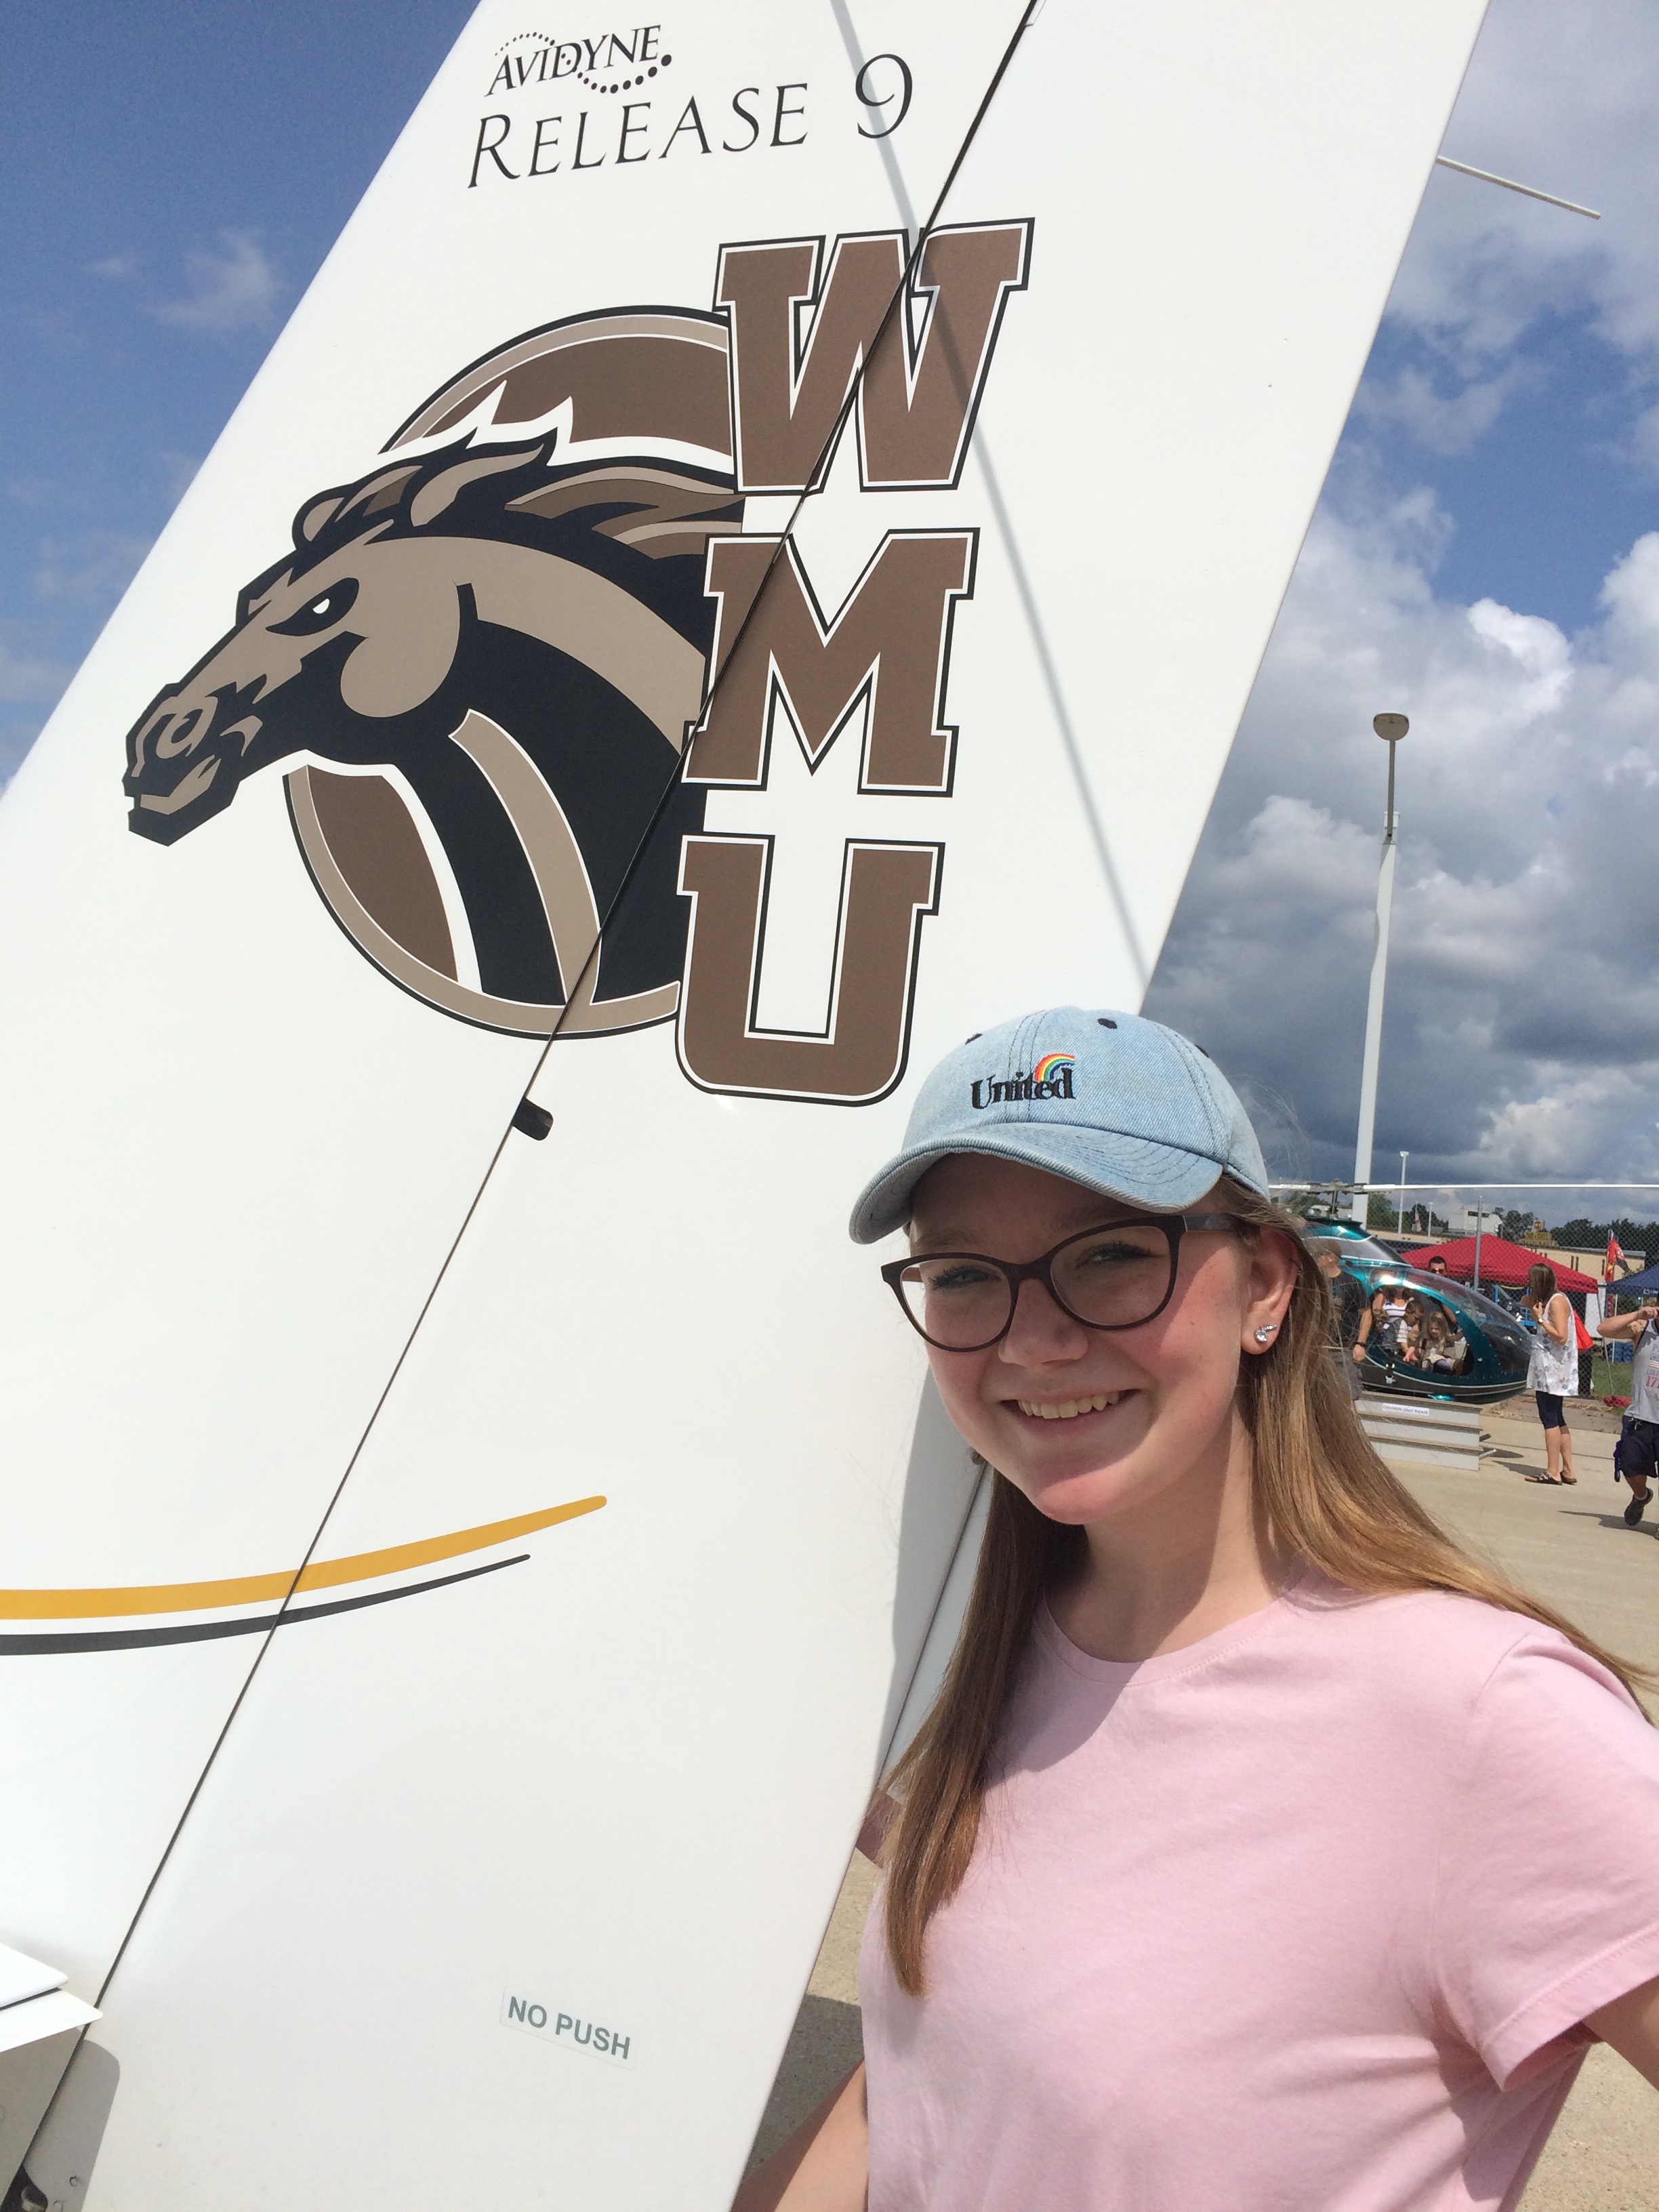 WMU Aviation Flight Science Student Miranda Goodison